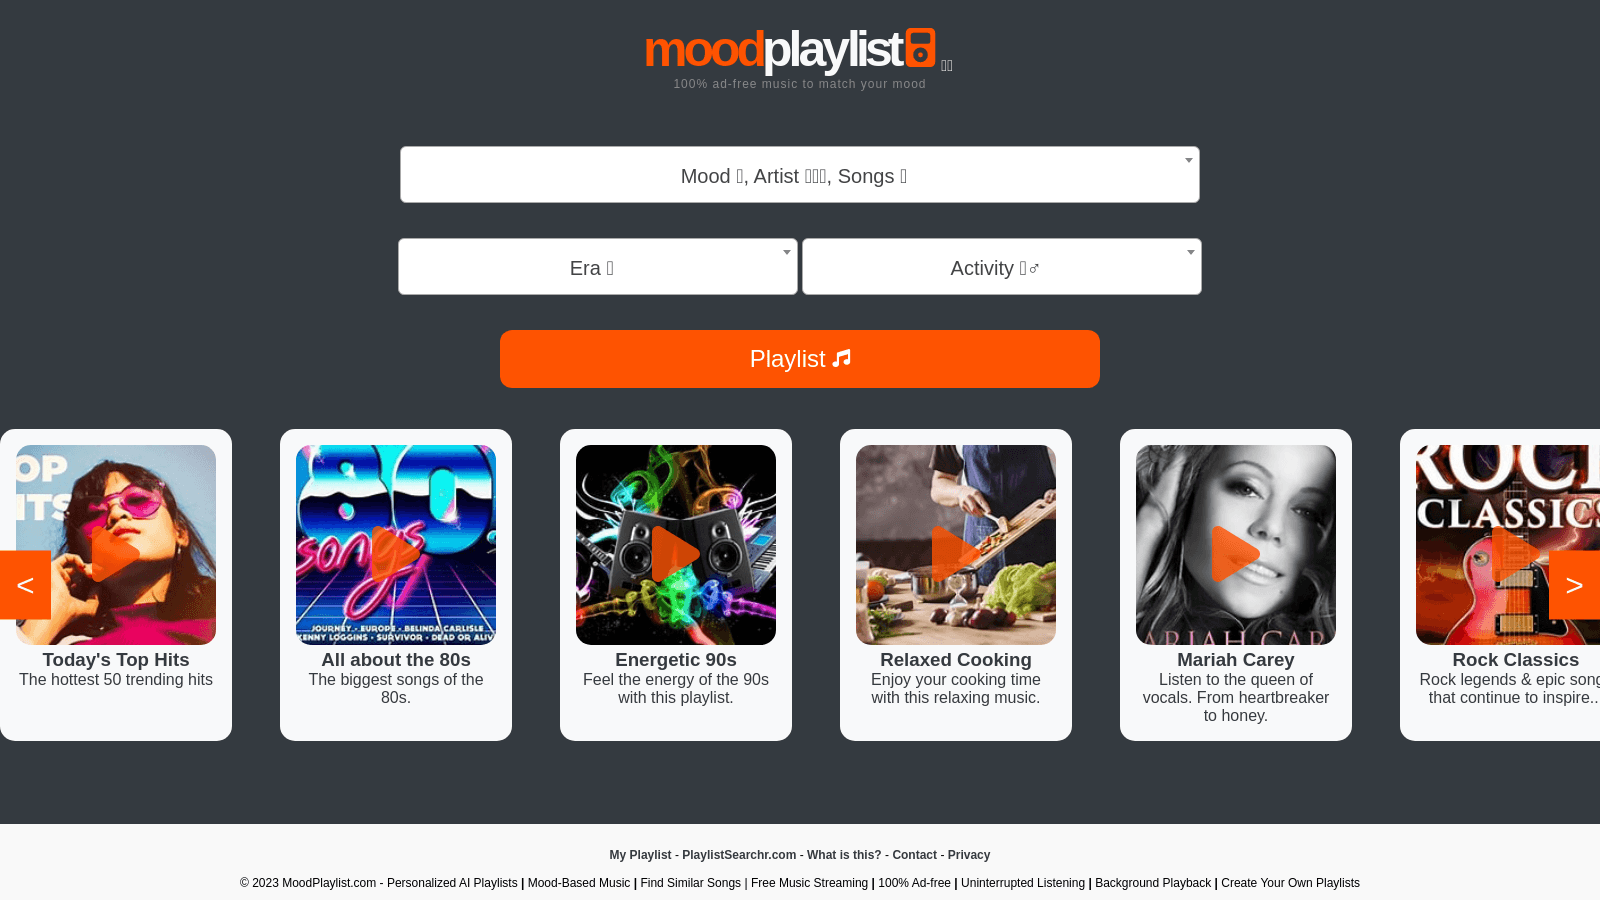 moodplaylist.com